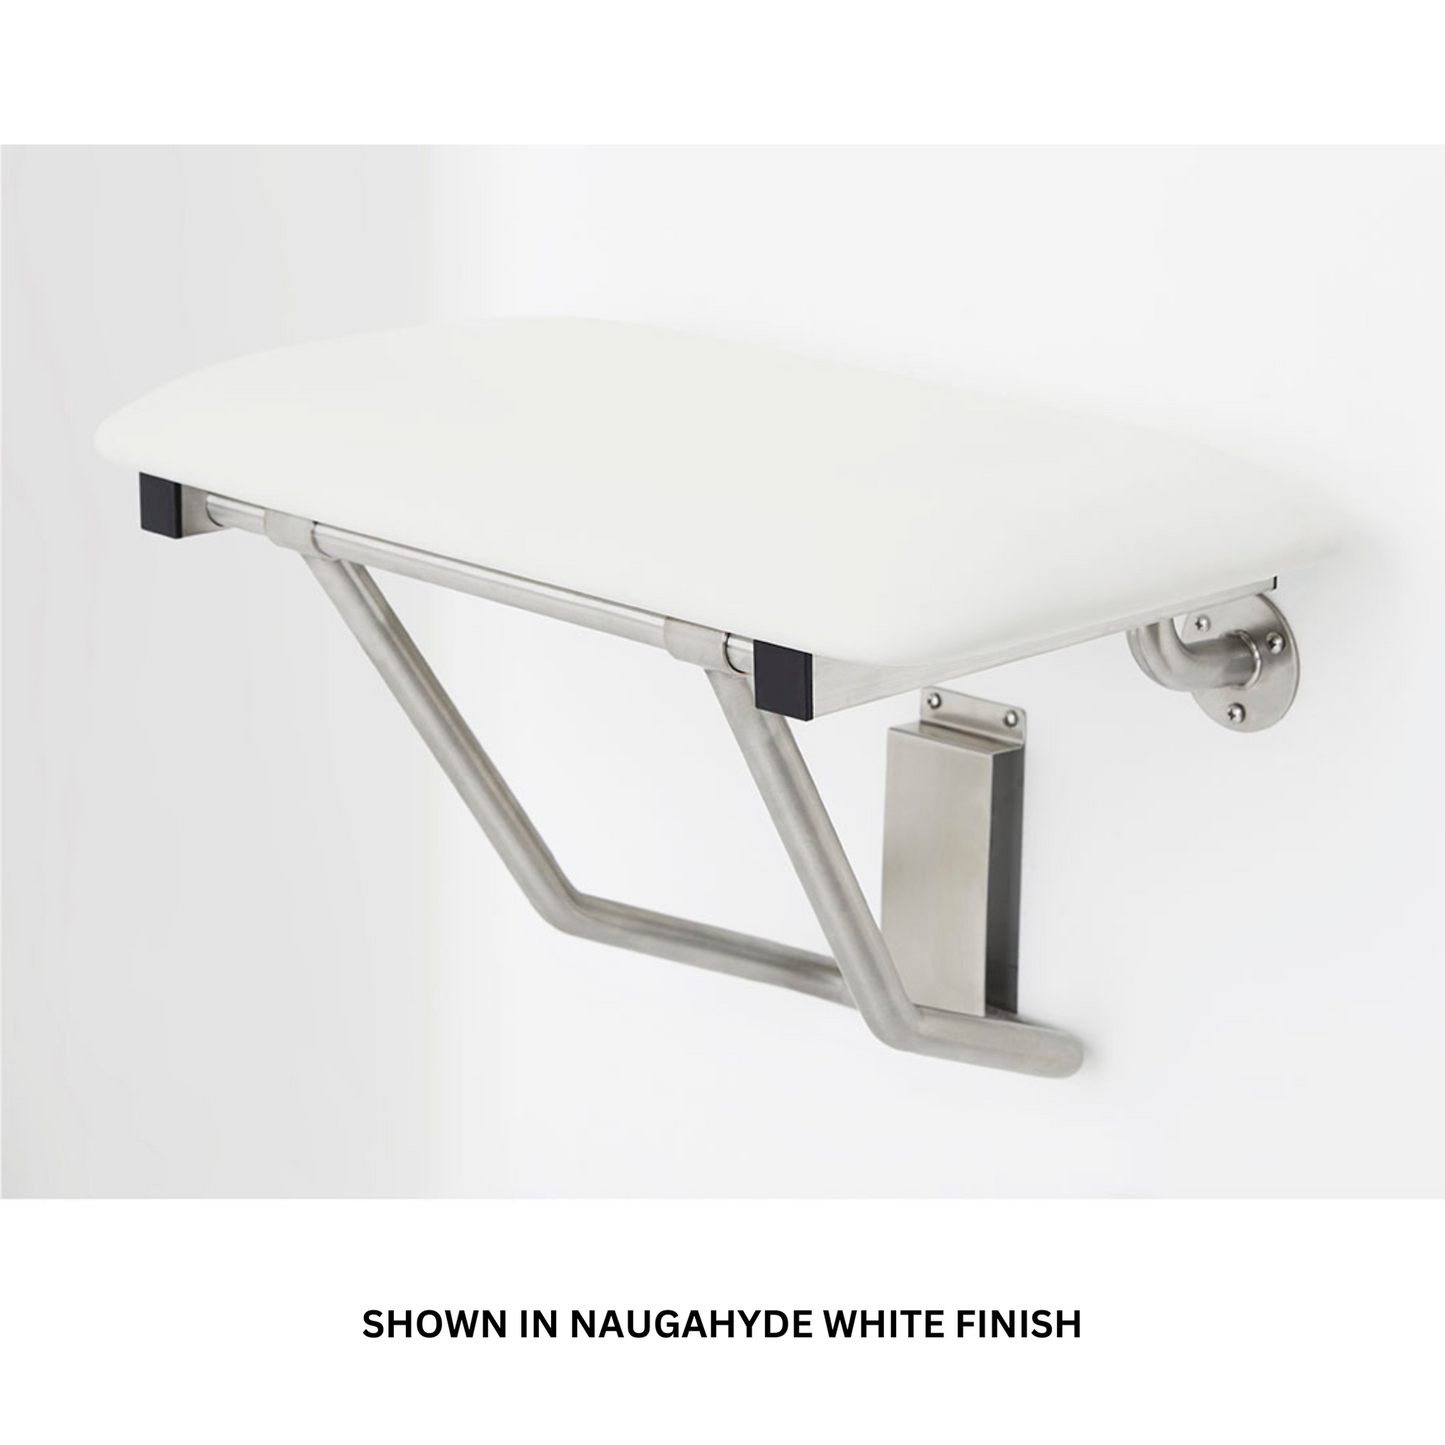 Seachrome Signature Series 30" W x 15" D Naugahyde Almond Cushion Seat Top Folding Wall Mount Bench Shower Seat